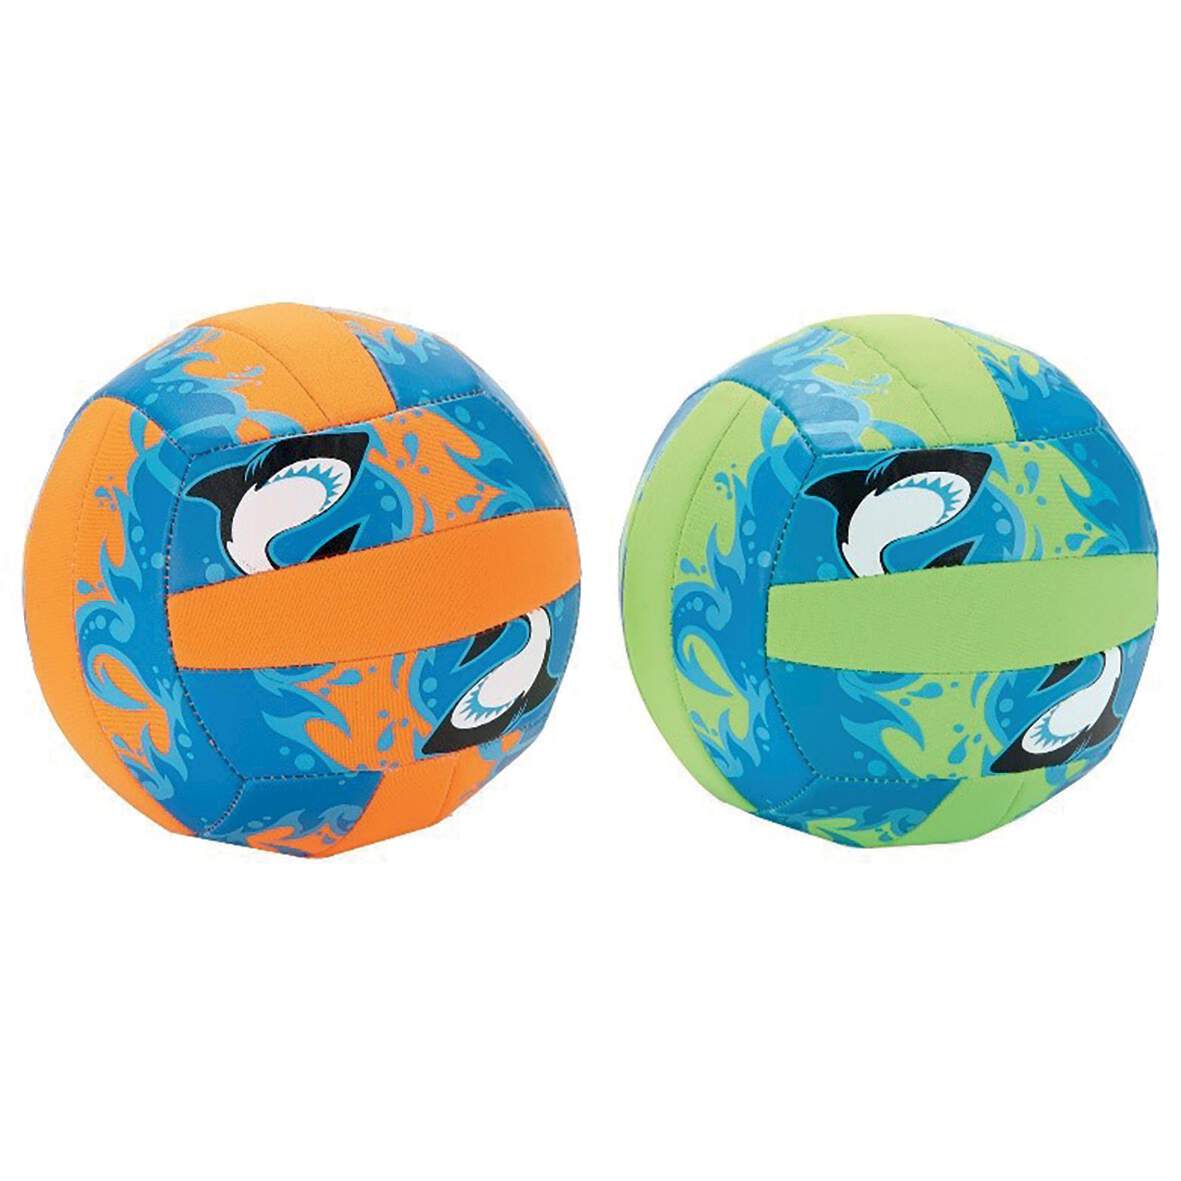 1289798 - Ball Neopren 16cm sort. grün-blau, orange-blau